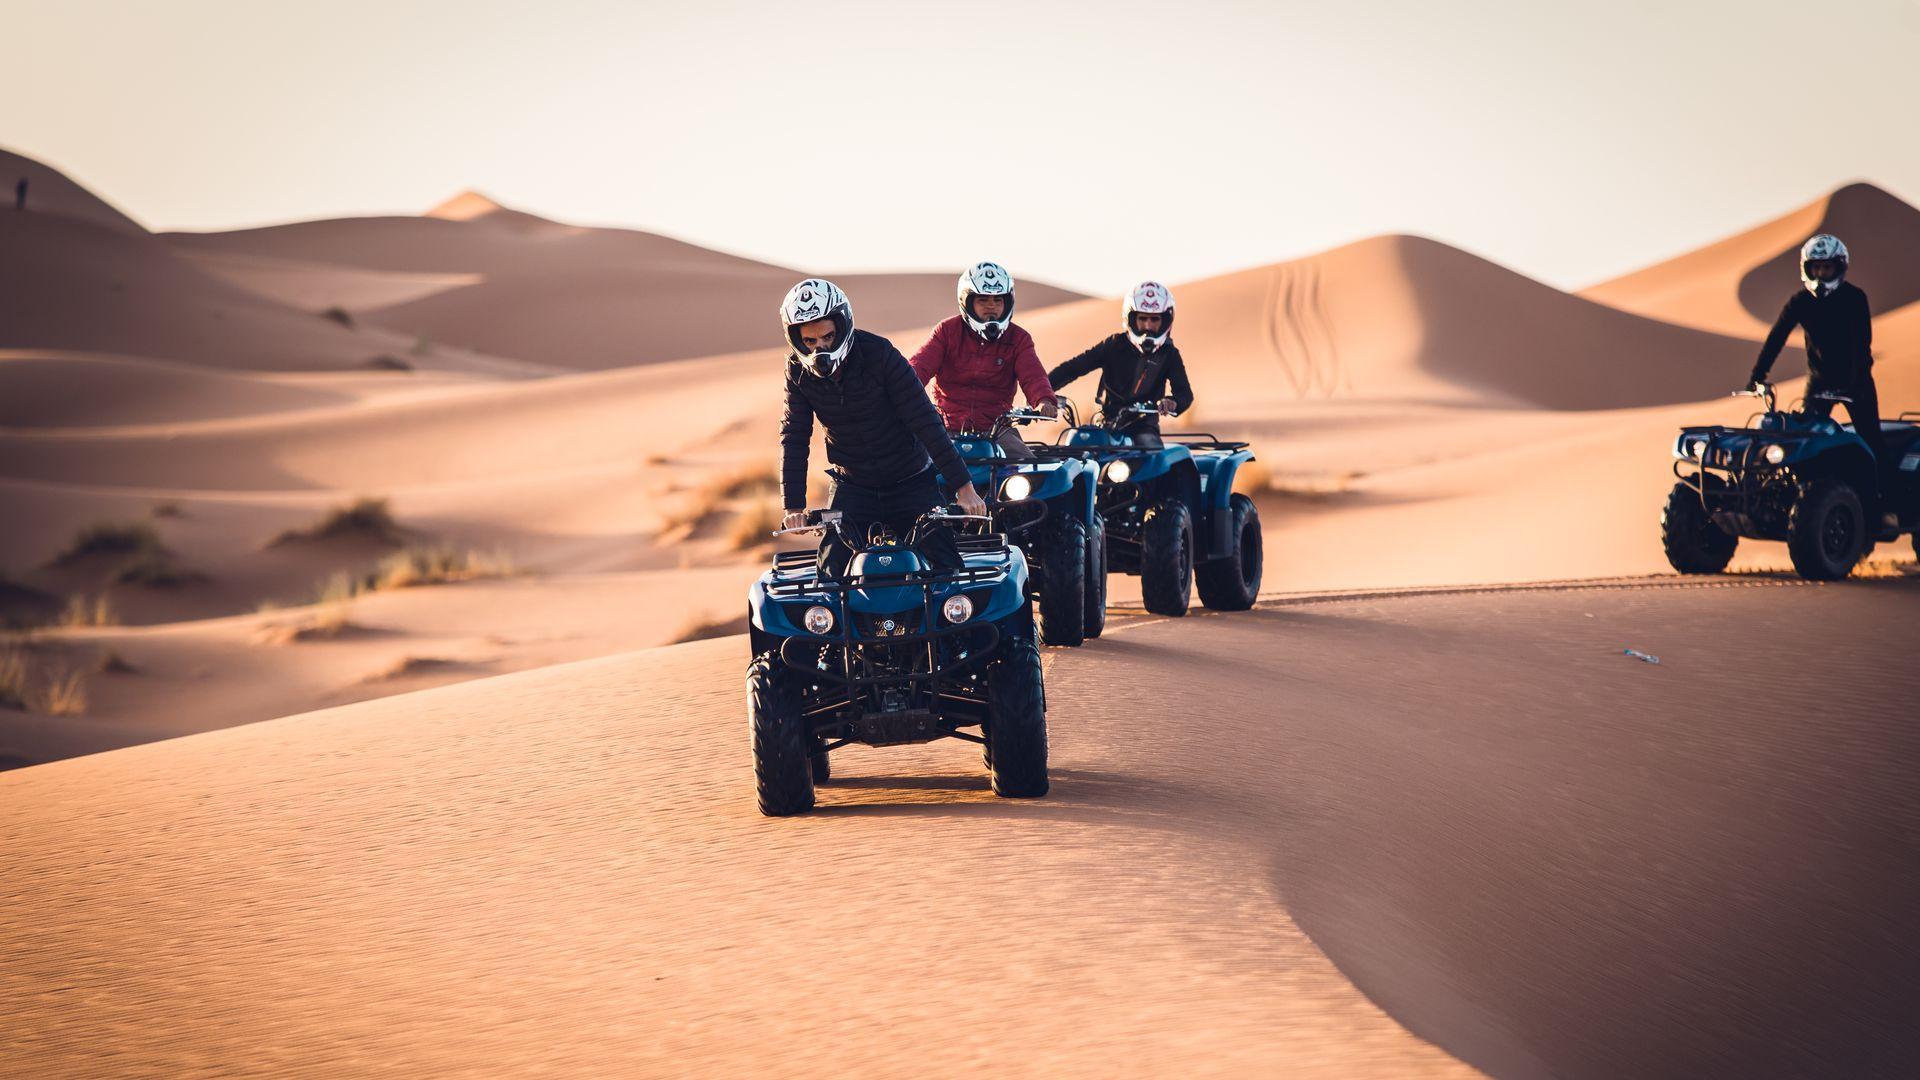 Quad Biking And Exploring The Sahara Desert